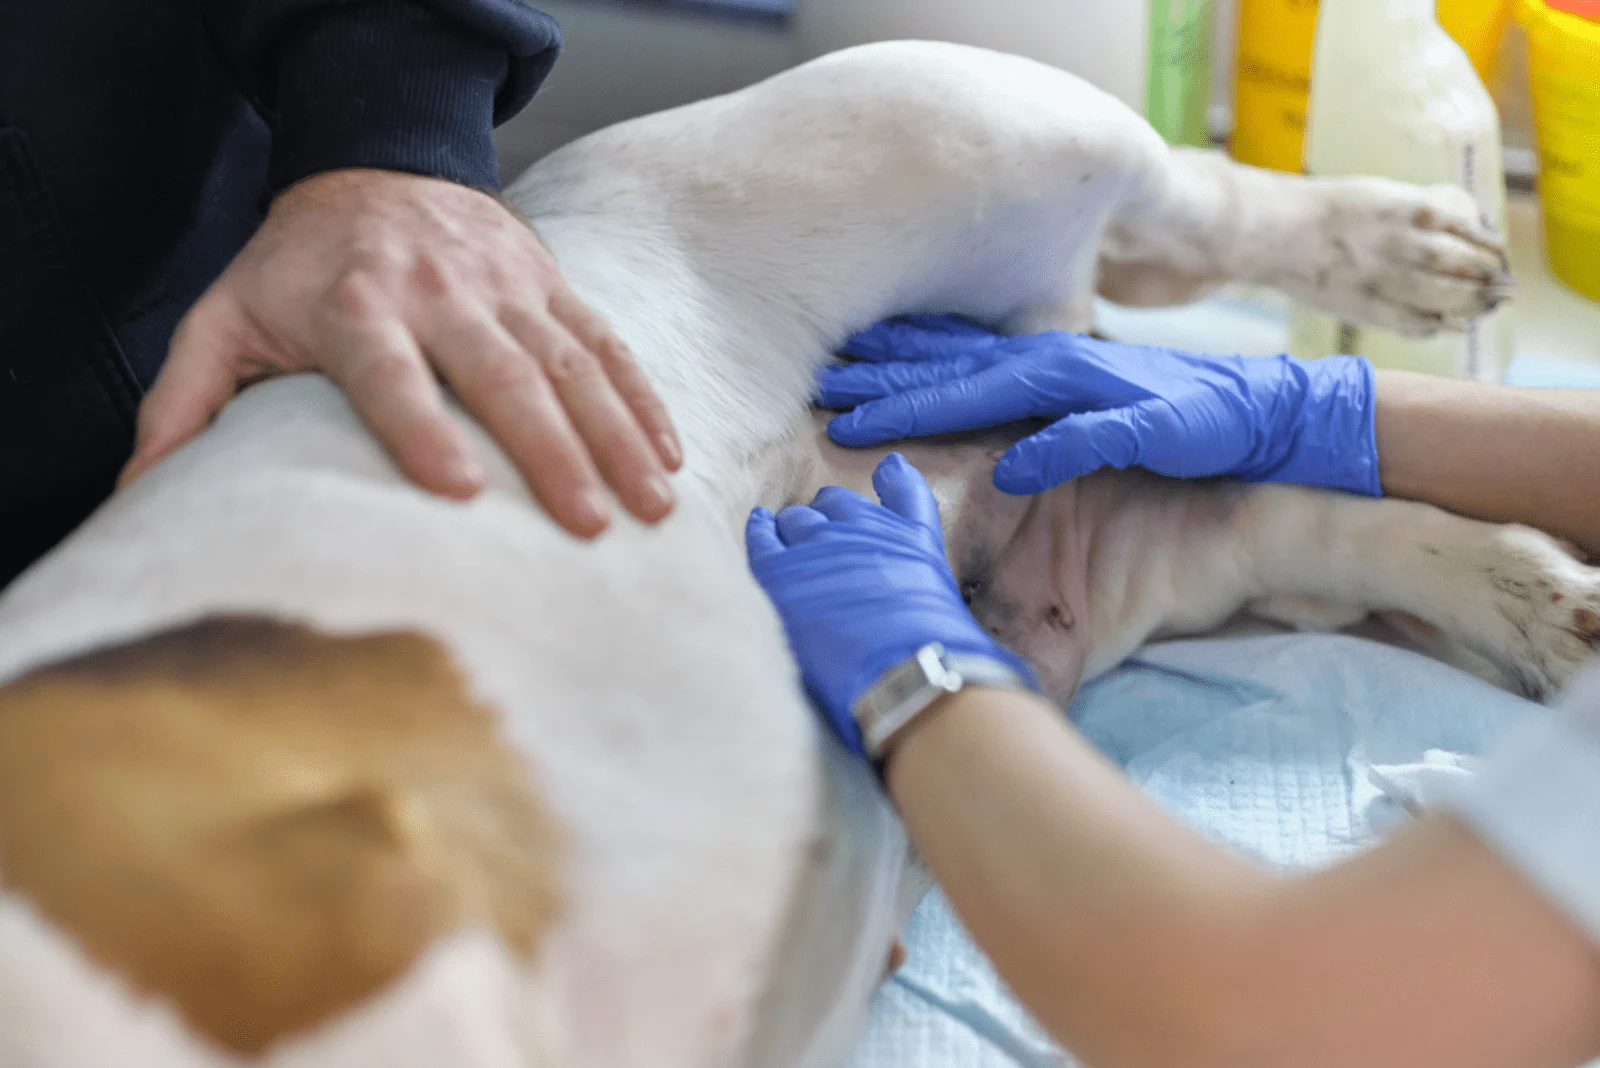 veterinarian examination of the dog's stomach